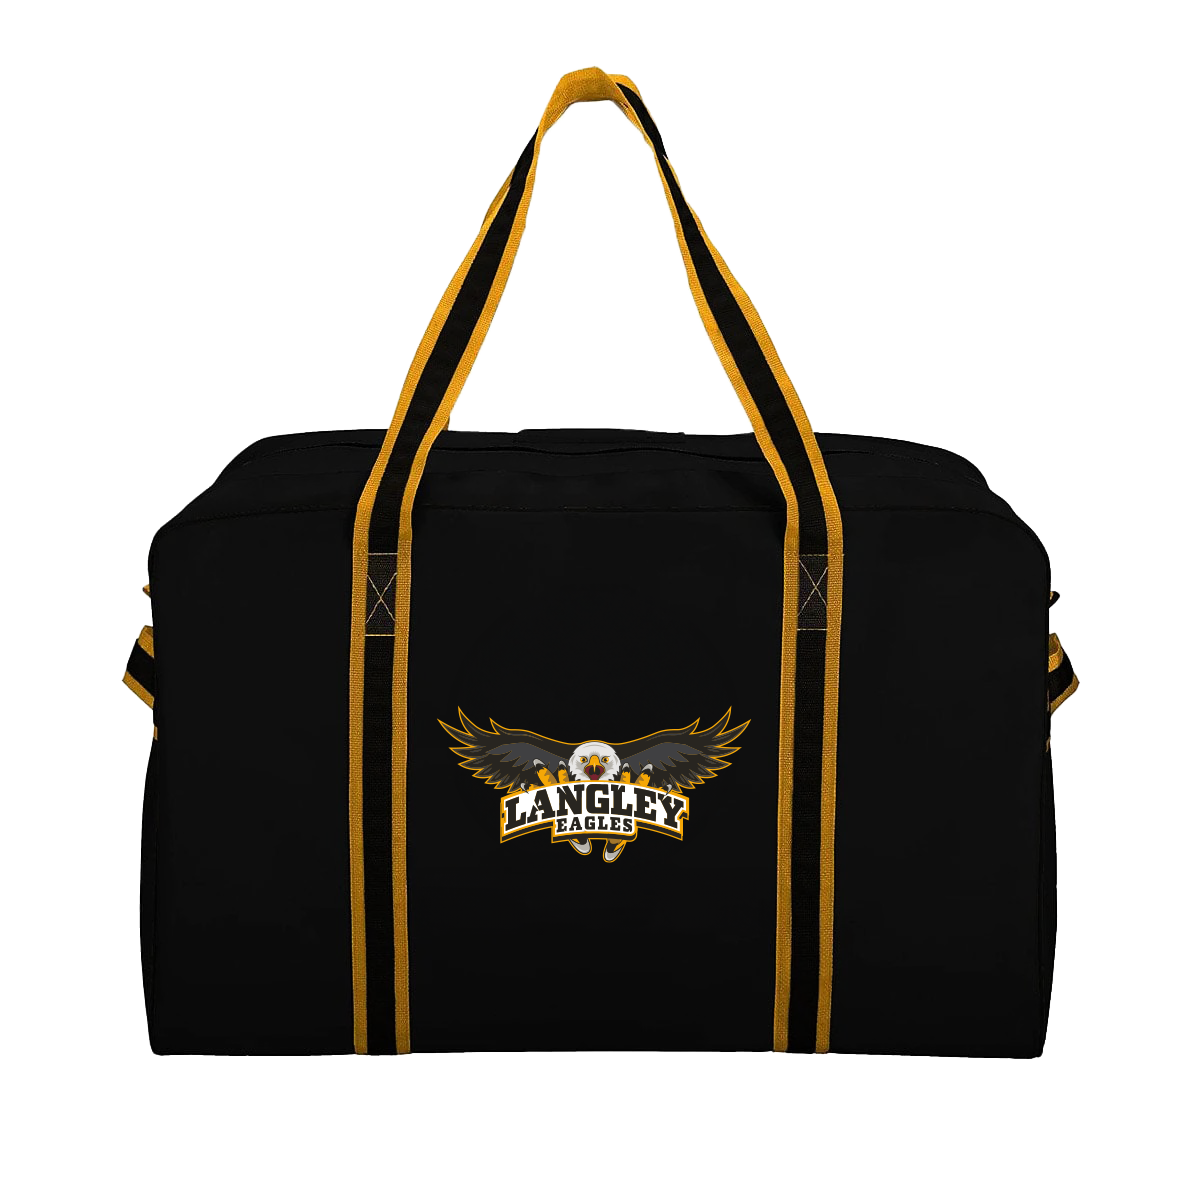 Langley Eagles -- Warrior Coach Hockey Bag